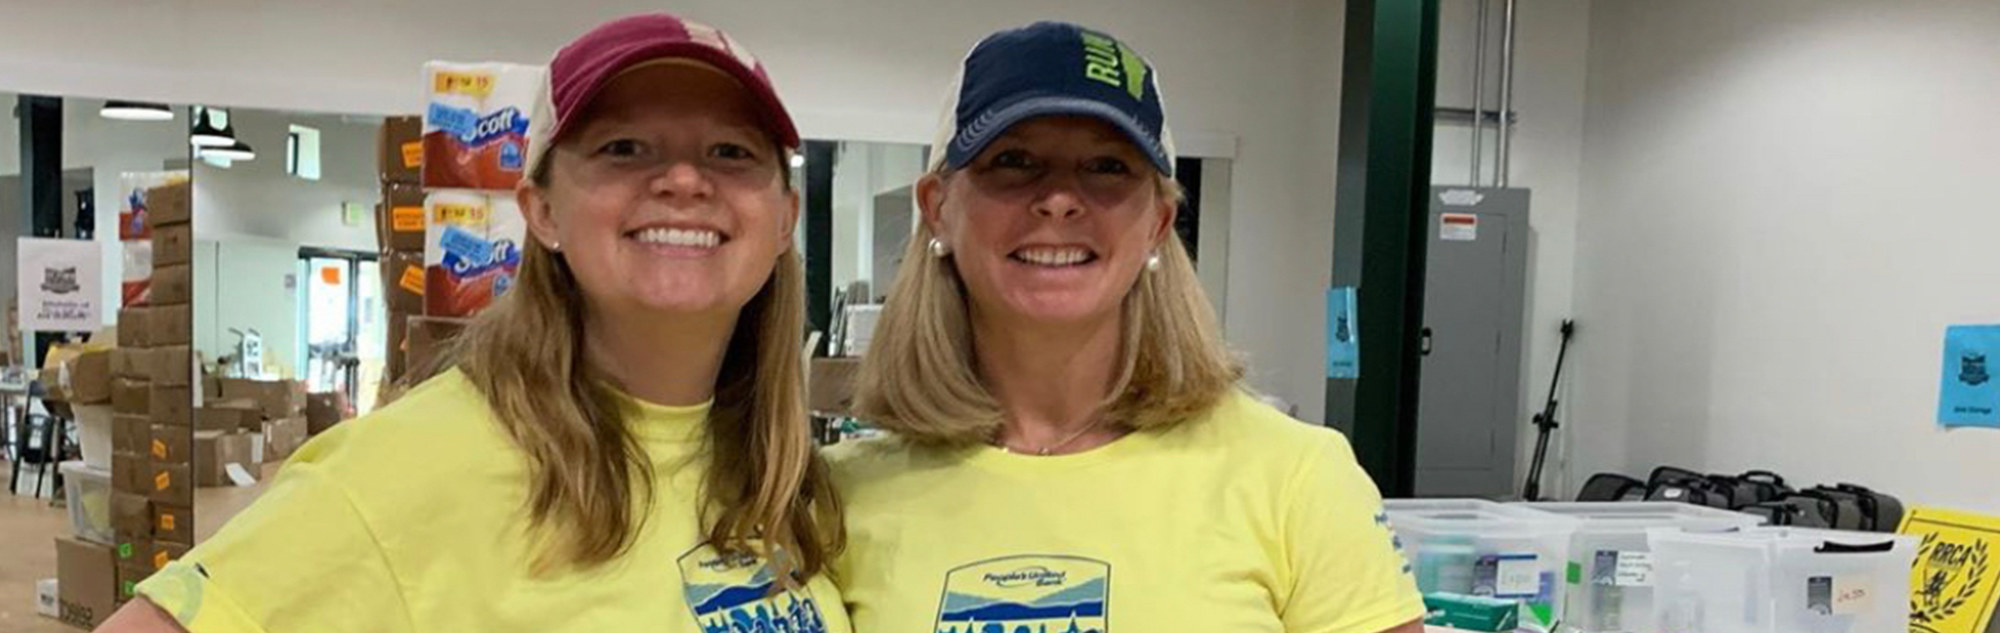 Two women volunteers at marathon Expo.